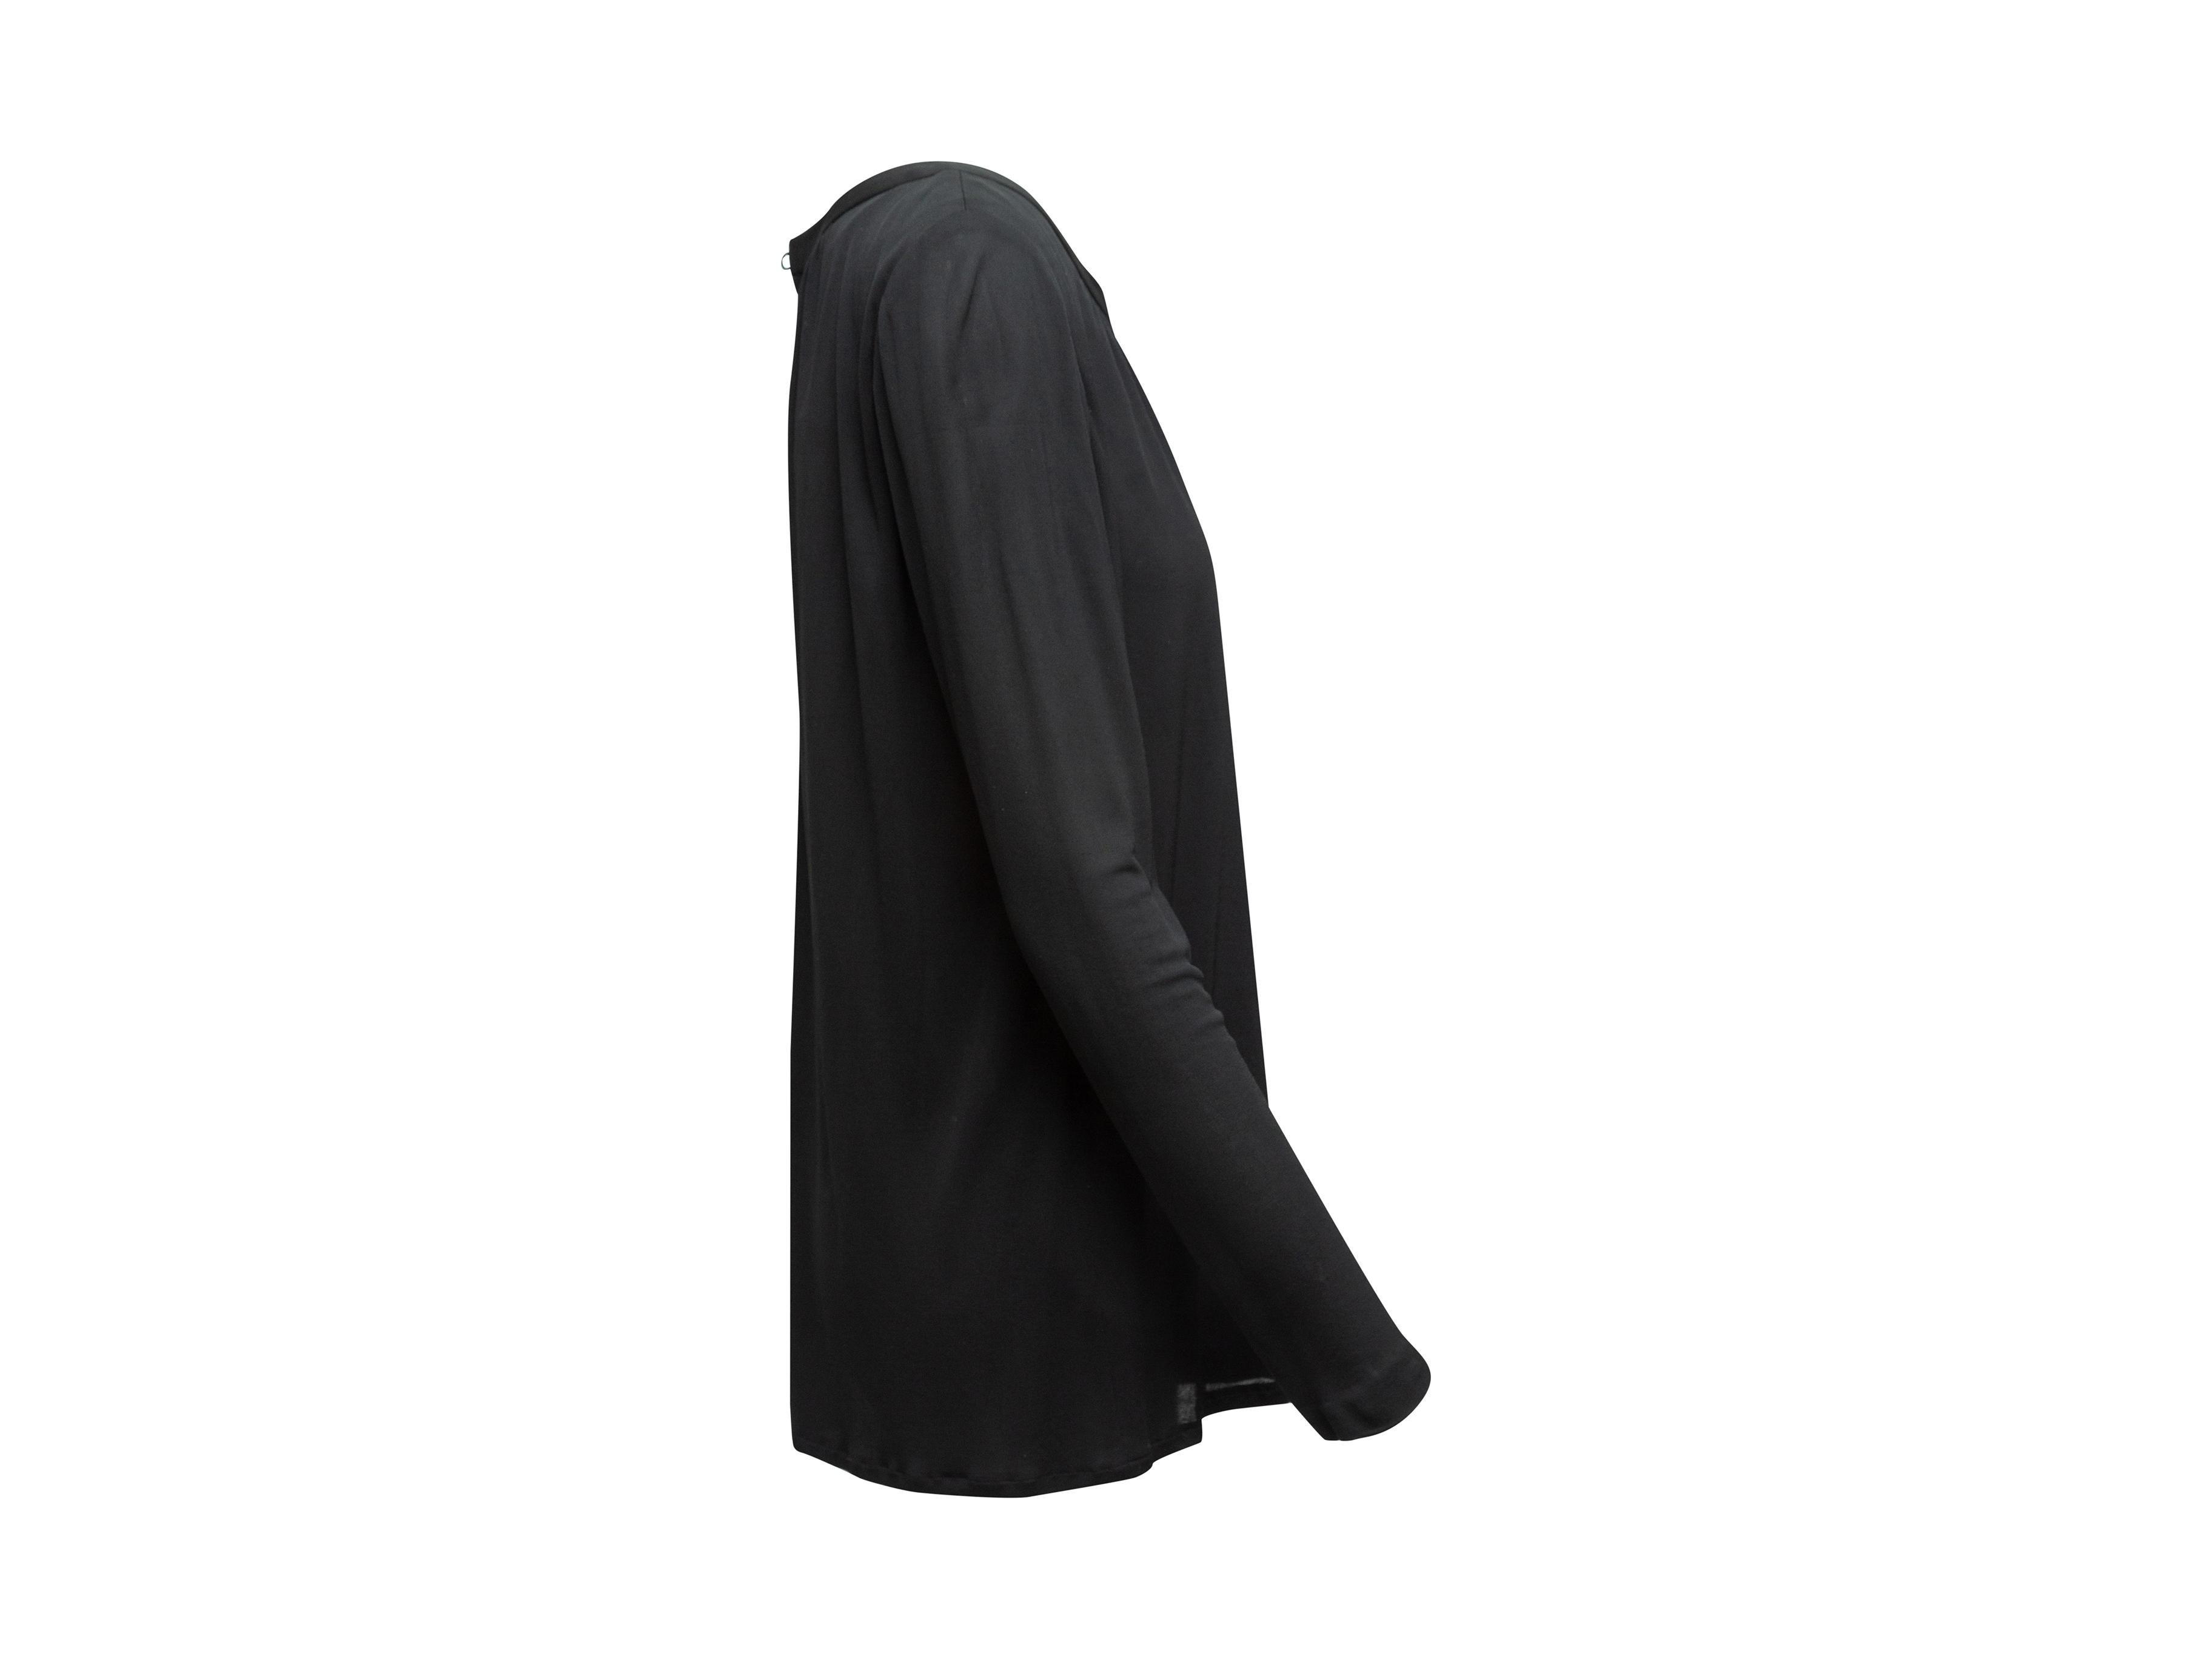 Product details: Vintage black long sleeve top by Yves Saint Laurent. Crew neck. Keyhole closure at nape. Designer size 42. 29